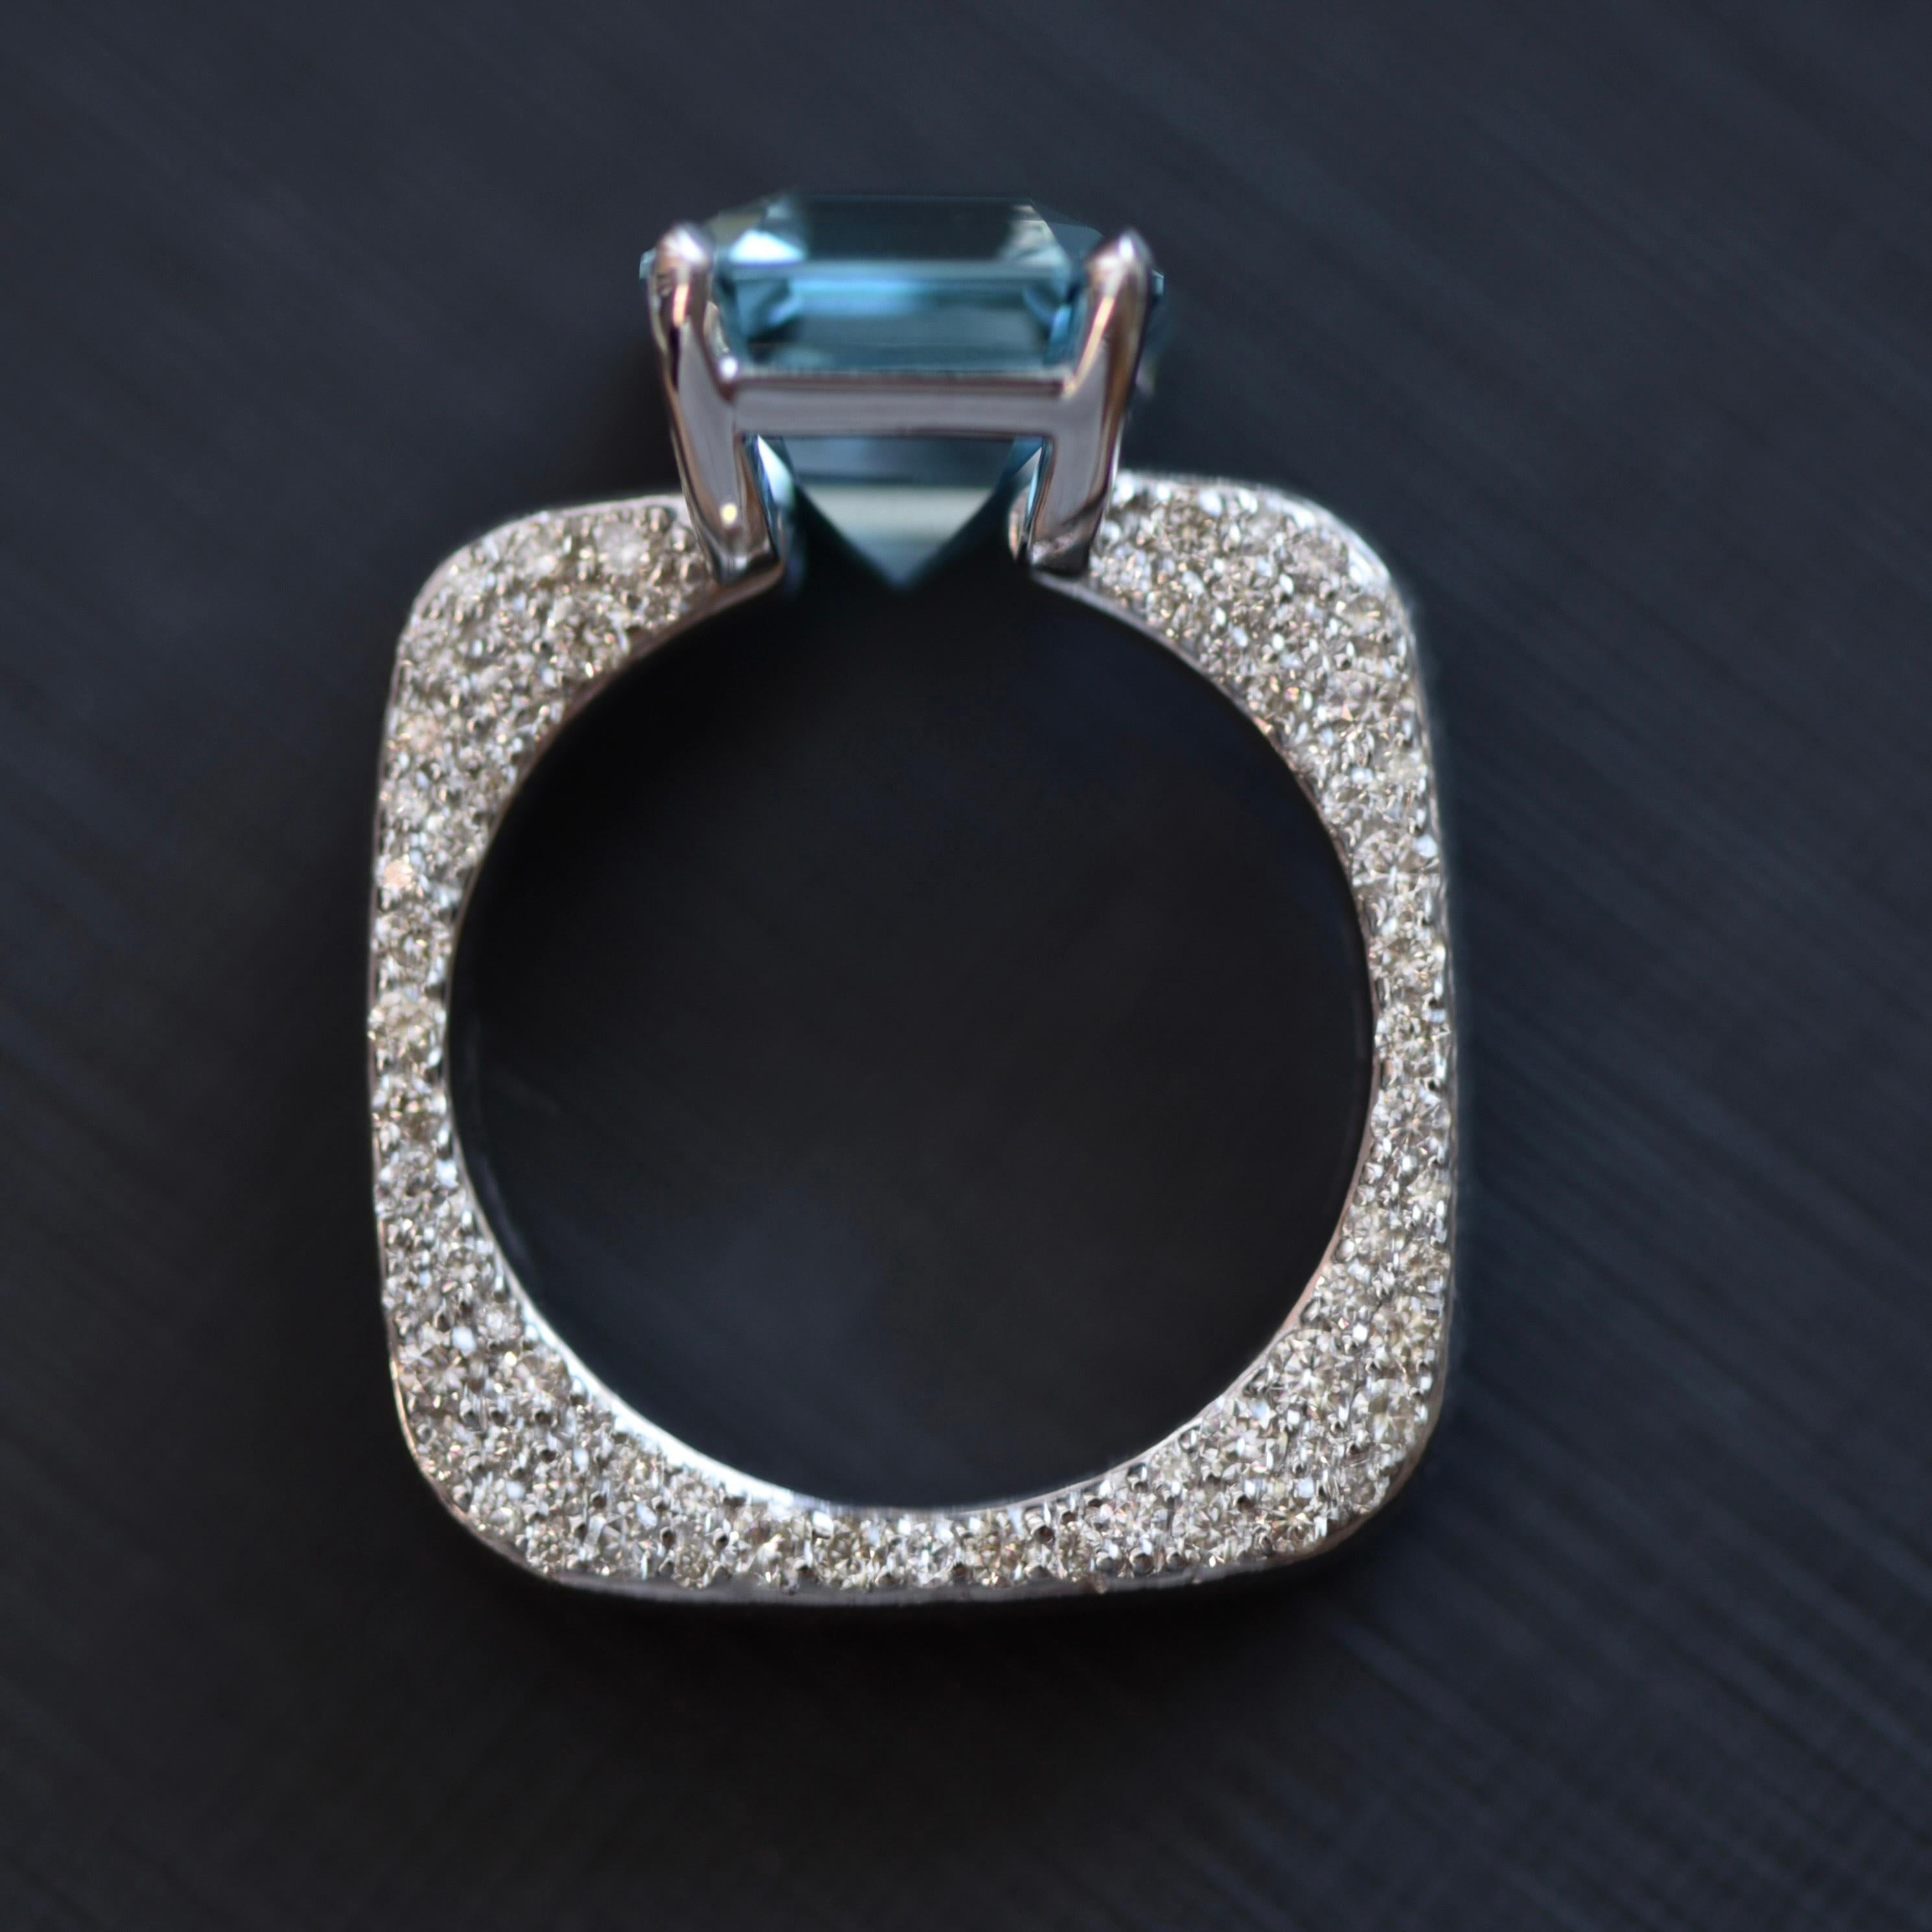 how much is a 5 carat aquamarine worth